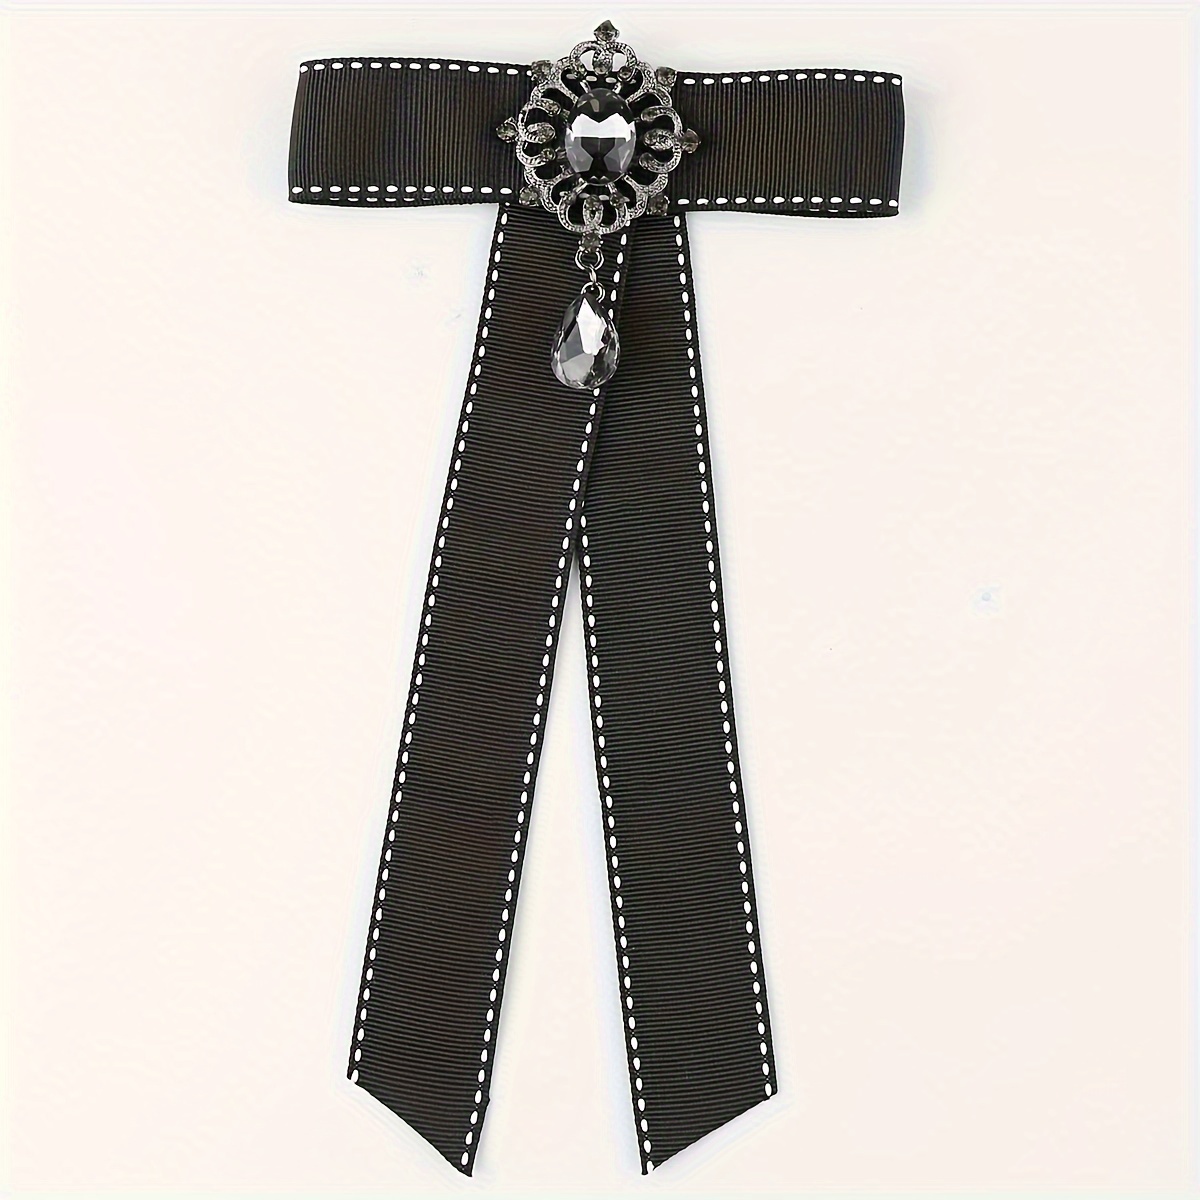 Women Long Silk Bow Tie, Ladies Satin Self Necktie/Ribbon BowTie